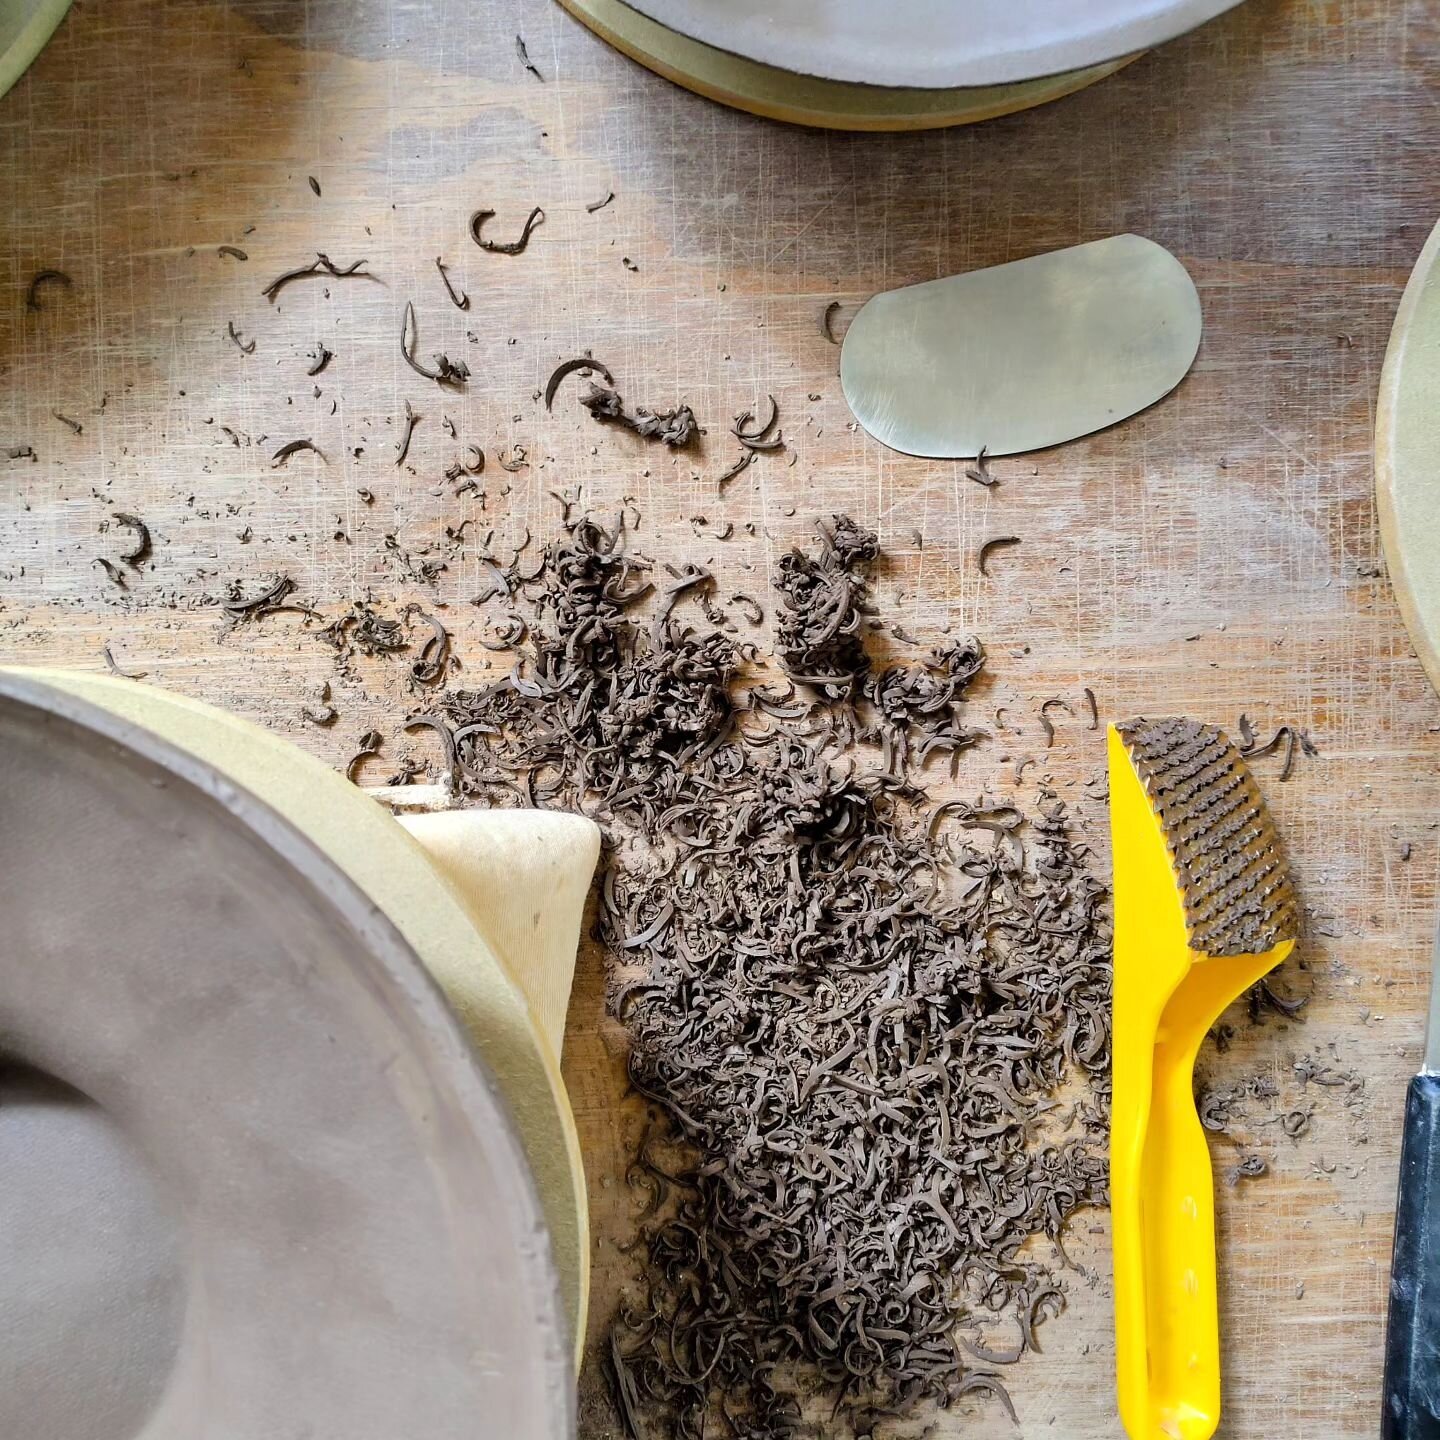 Trimming bowls!

#cerqmics #minimaltableware #ceramicbowls #handmadeceramics #craftmakerfrome #makeroftheday #ceramica #pottery #tablewaredesign #modernrustic